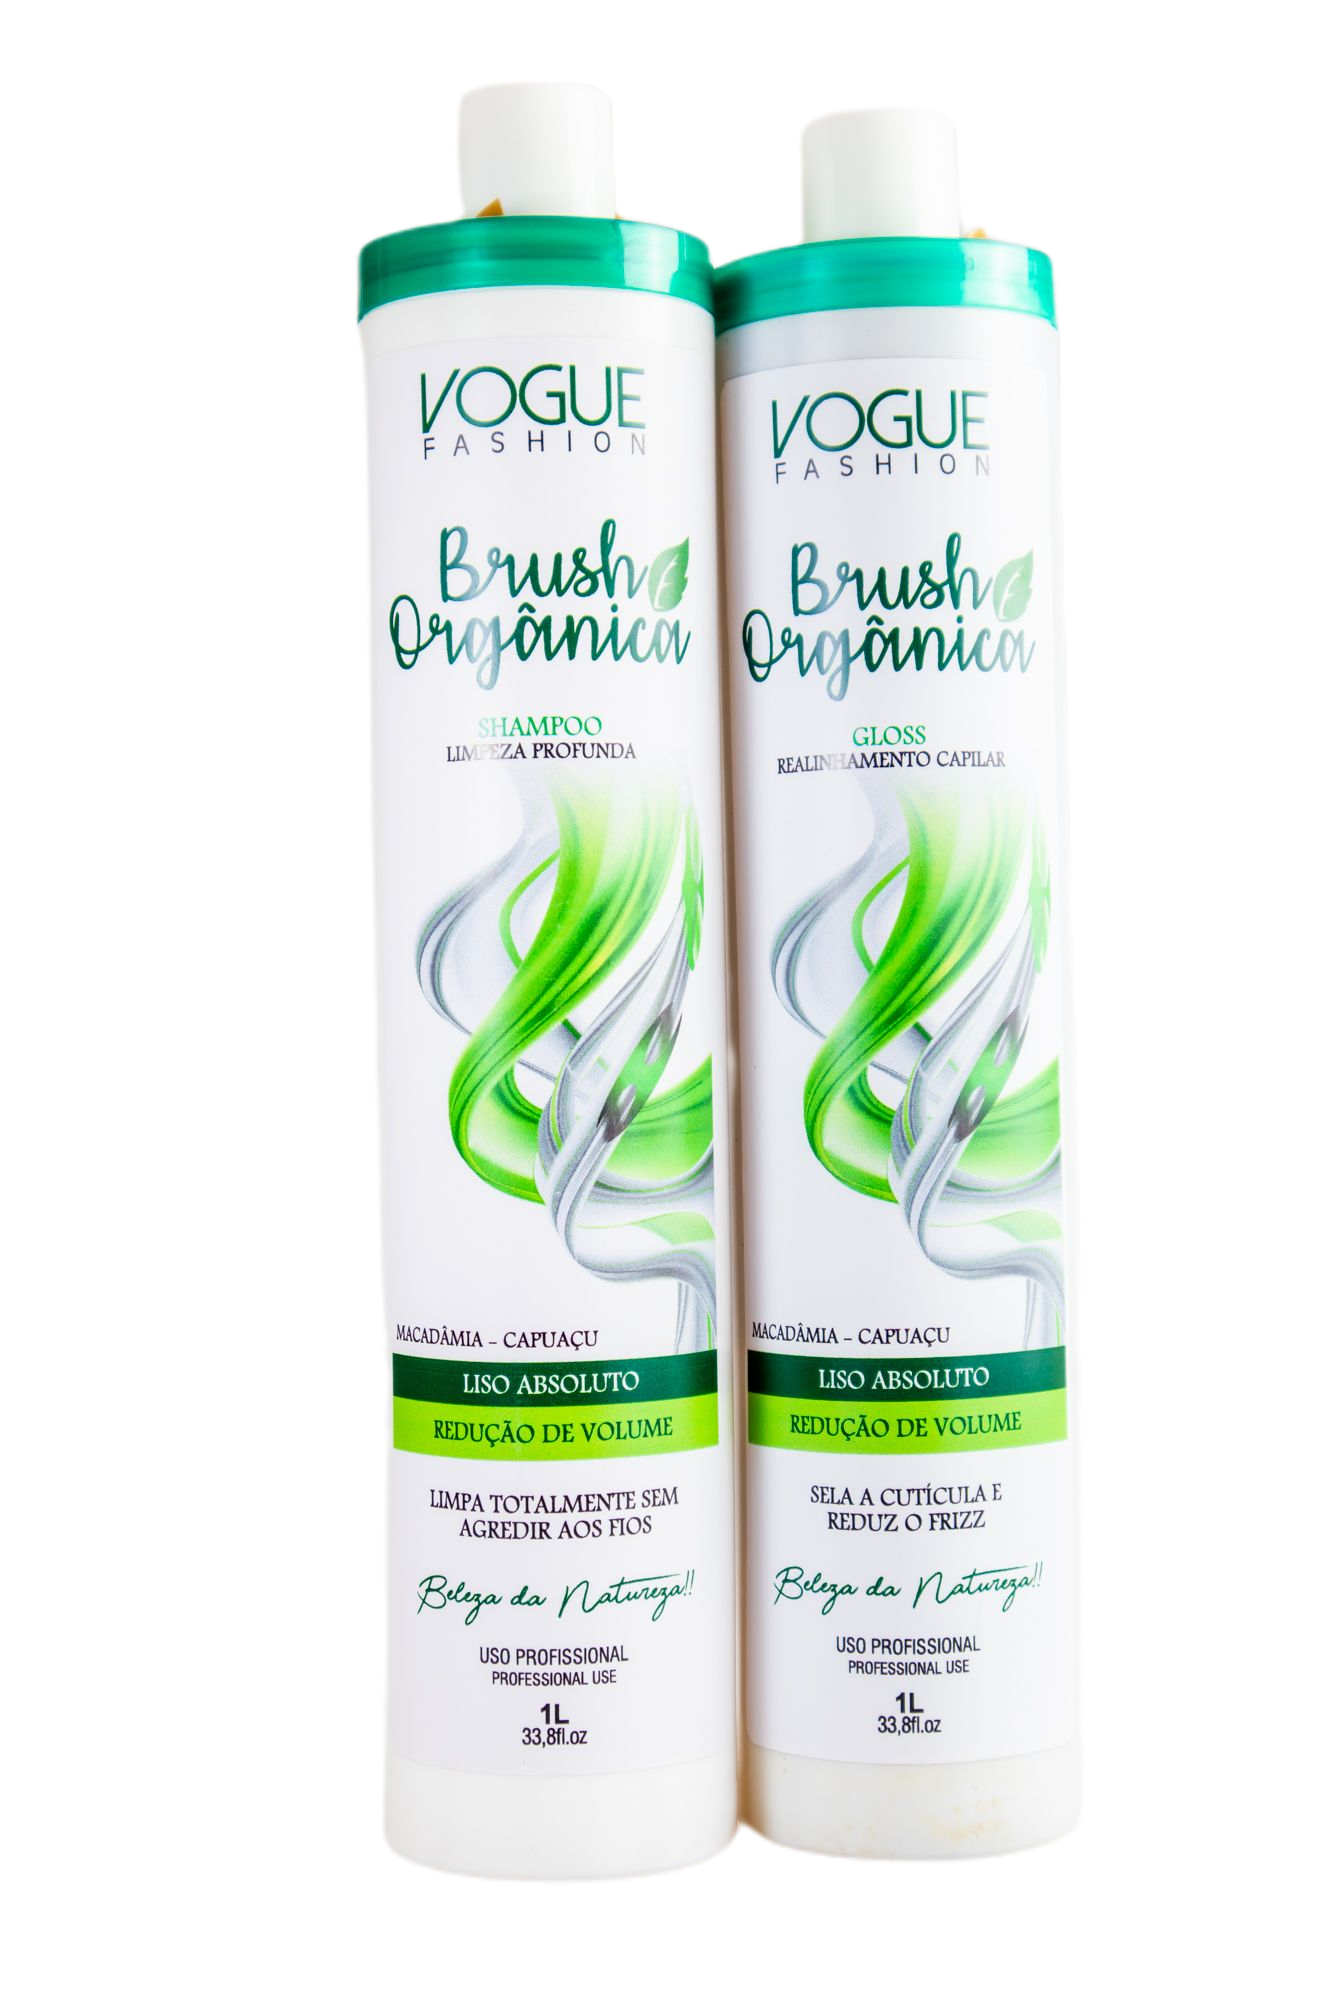 Vogue Fashion Brazilian Keratin Treatment Organic Brush Straightening Blowout Volume Reduction Smoothing Kit 2x1L - Vogue